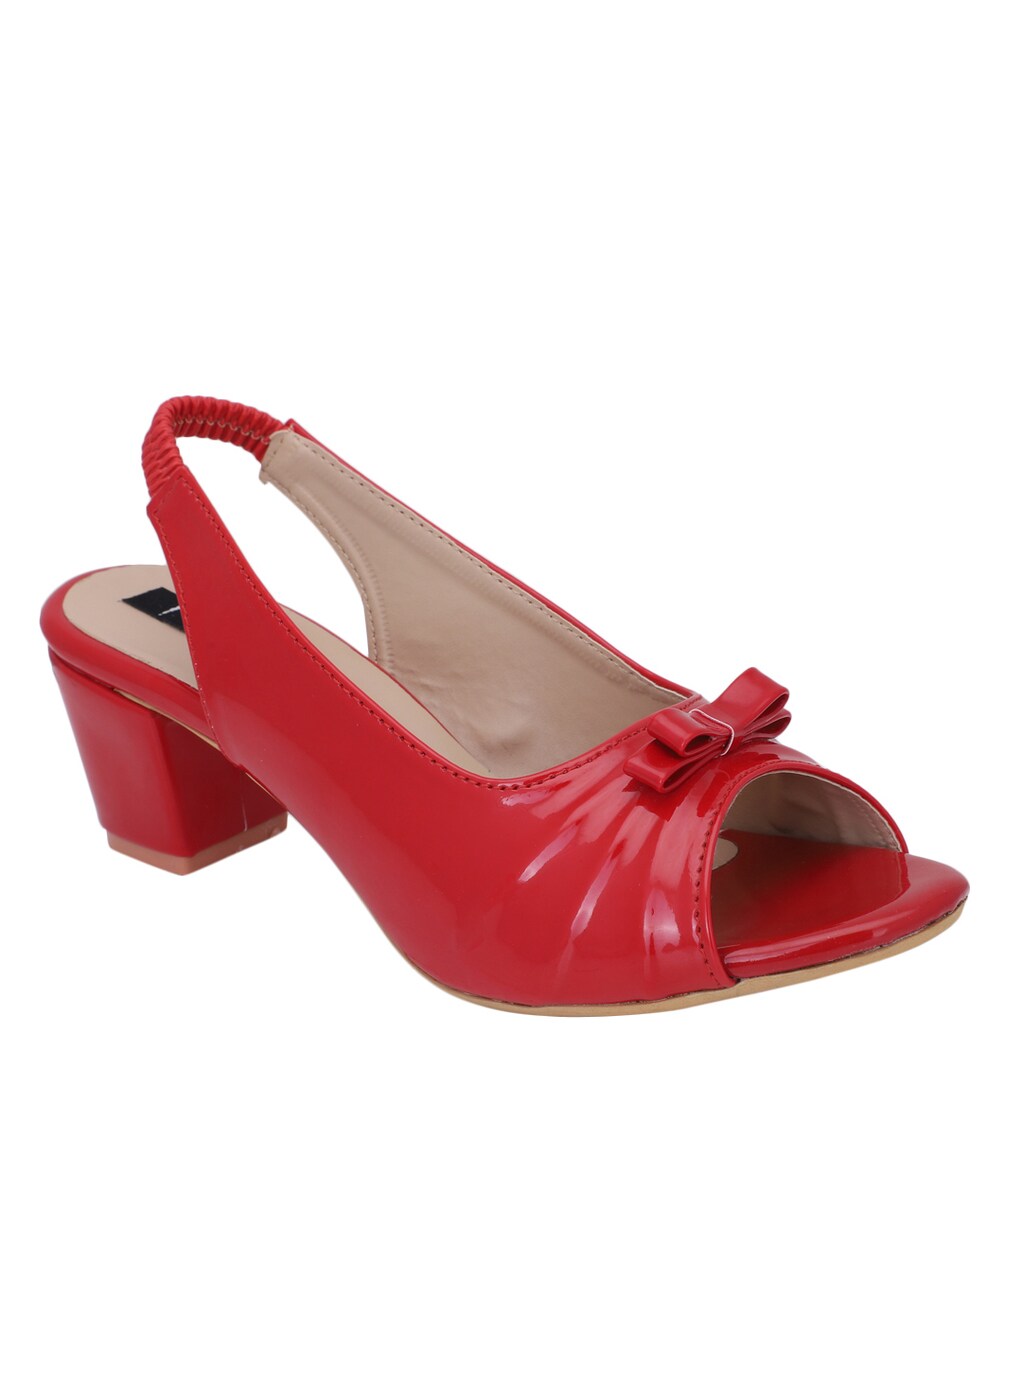 red chunky heels